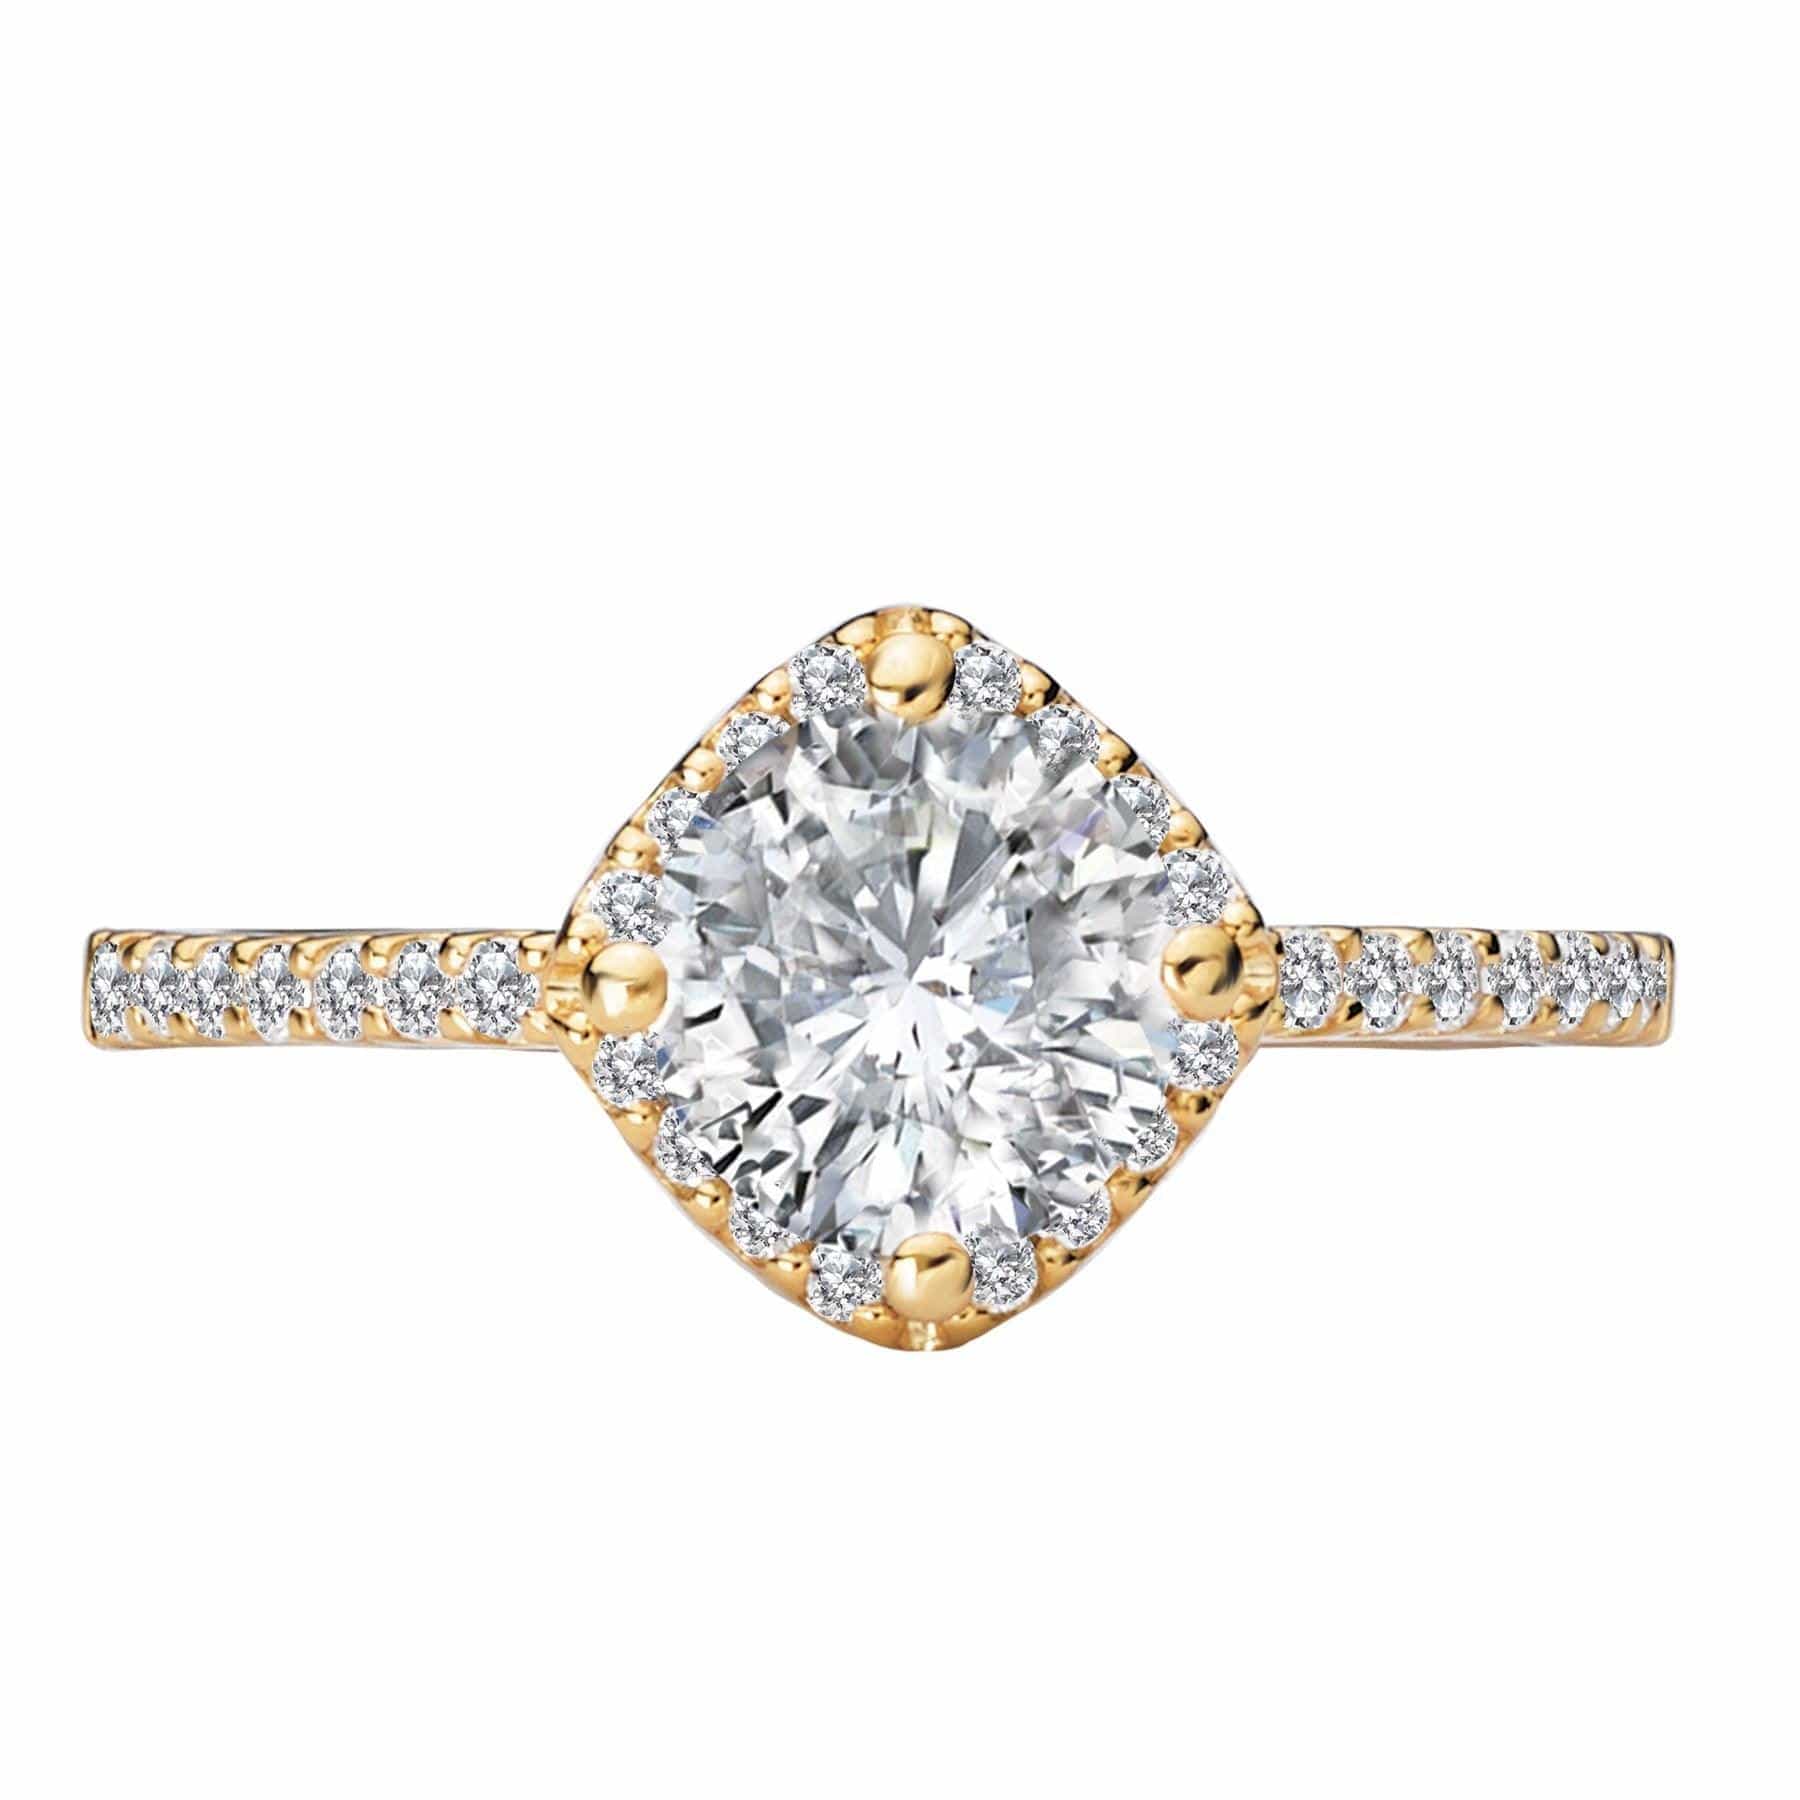 BW JAMES Engagement Rings " The Verona" Halo Semi-Mount Diamond Ring